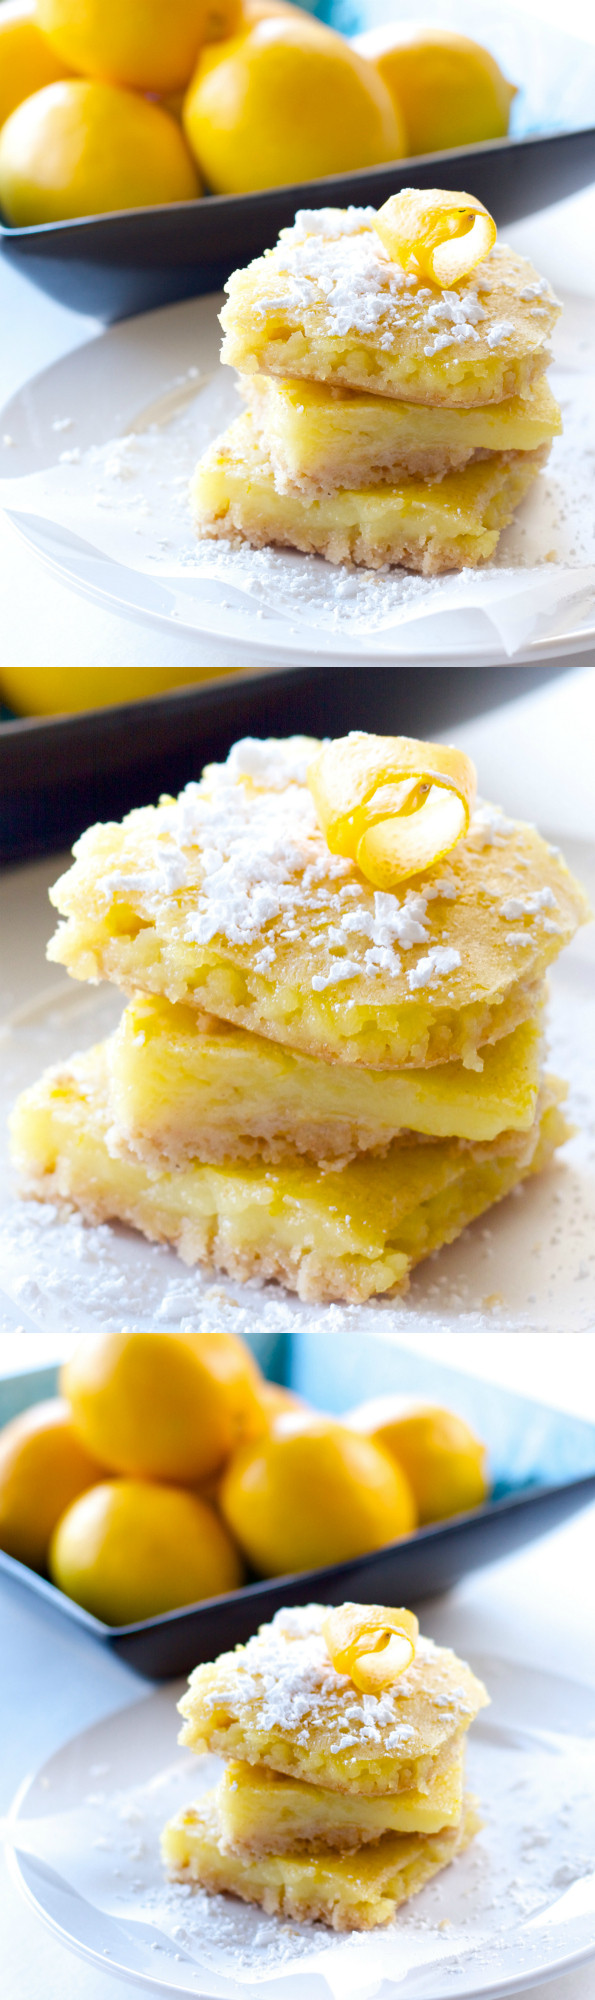 Healthy Lemon Desserts
 Healthy Meyer Lemon Bars Recipe